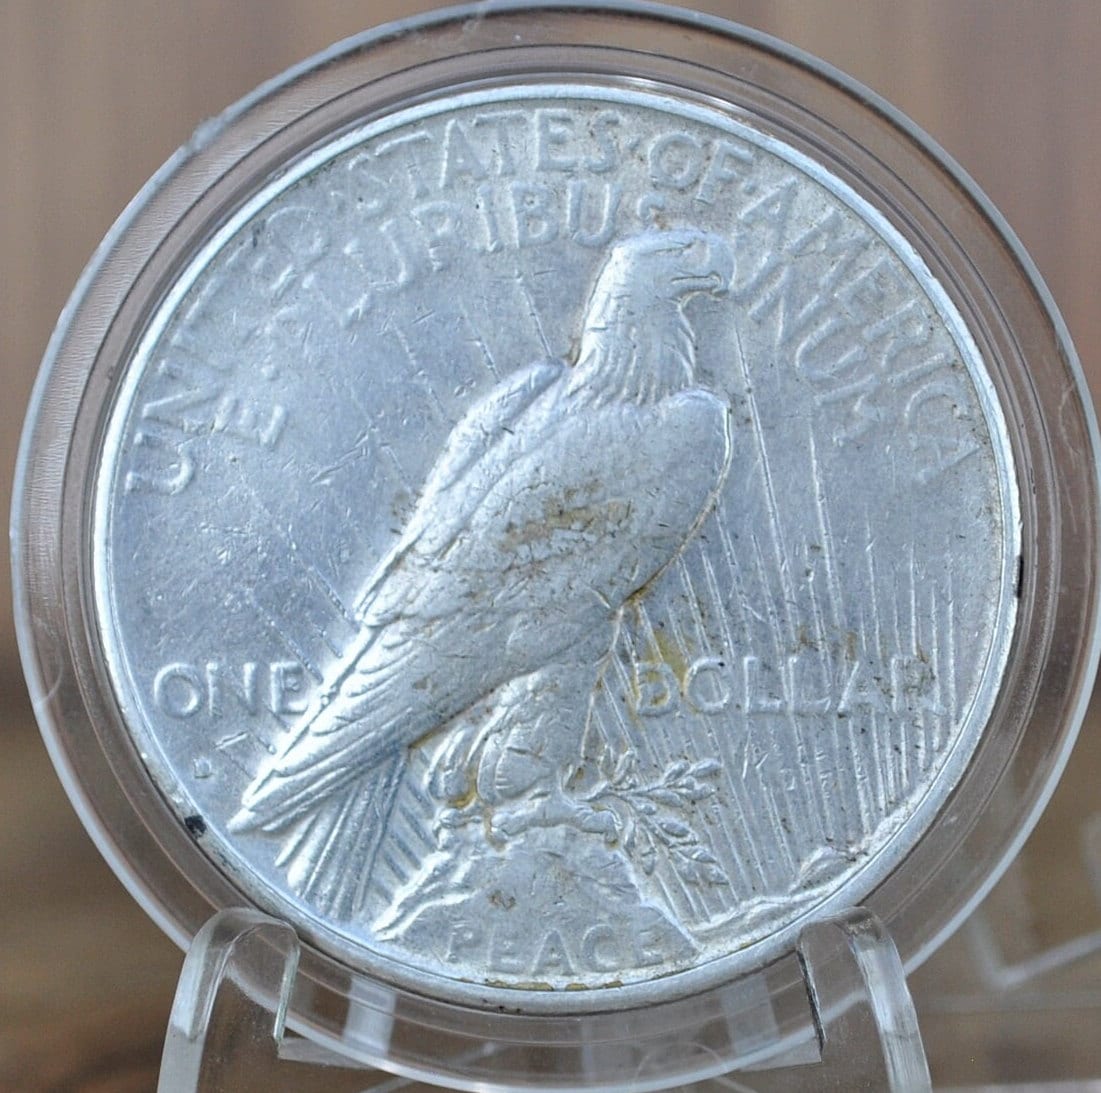 1934-D Peace Dollar - VF Condition / Grade - 1934 D Peace Silver Dollar - Denver Mint - Better Date & Mint - Silver Dollar 1934